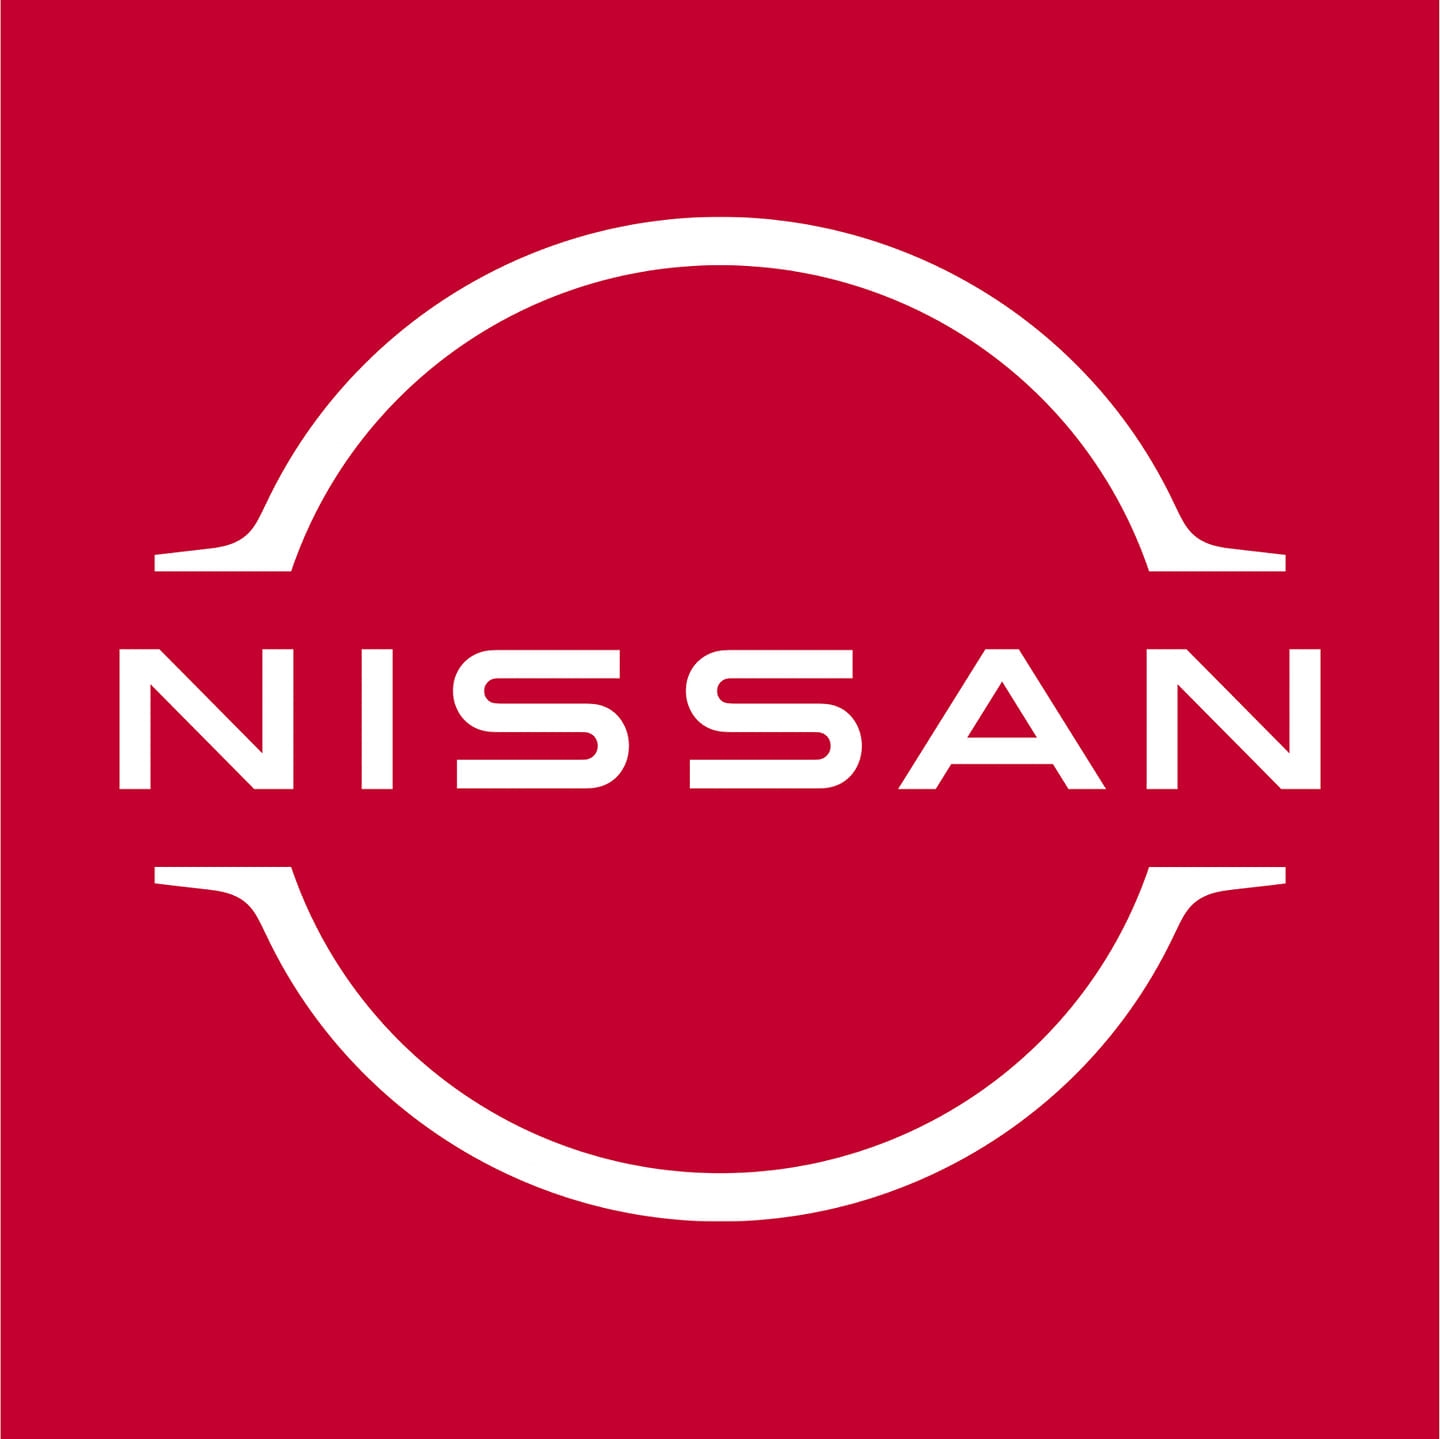 NMT NISSAN|Show Room|Automotive